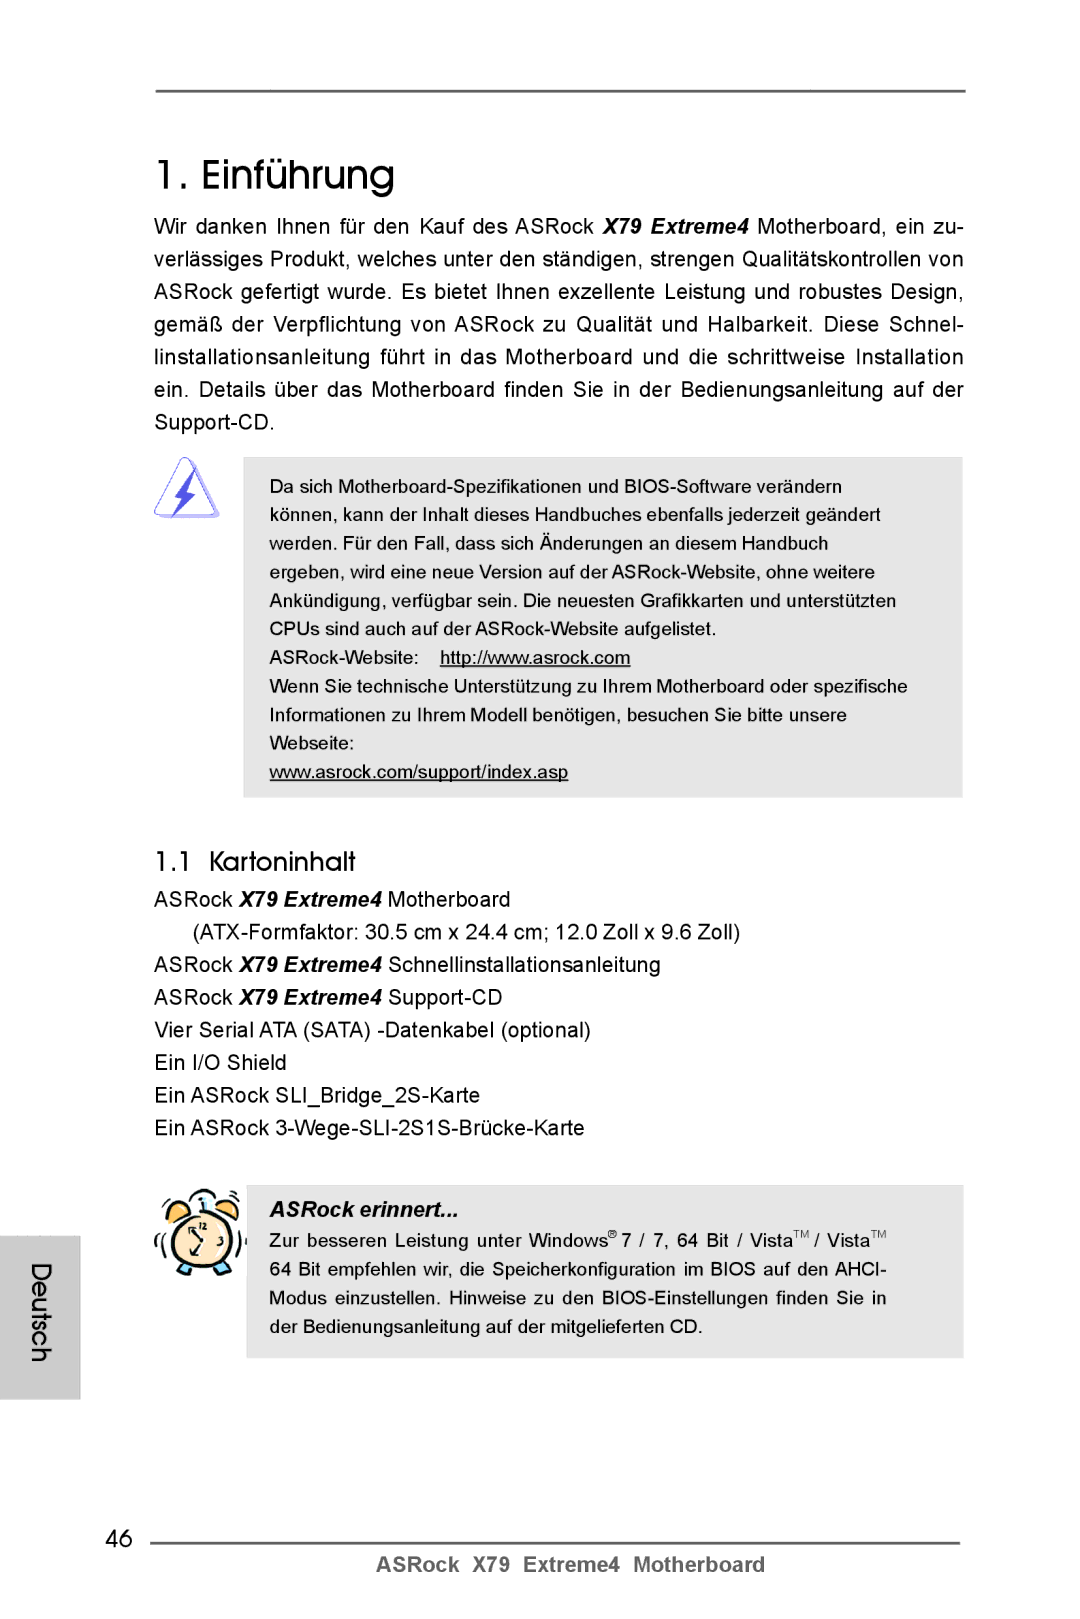 ASRock X79 Extreme4 manual Deutsch, Kartoninhalt 